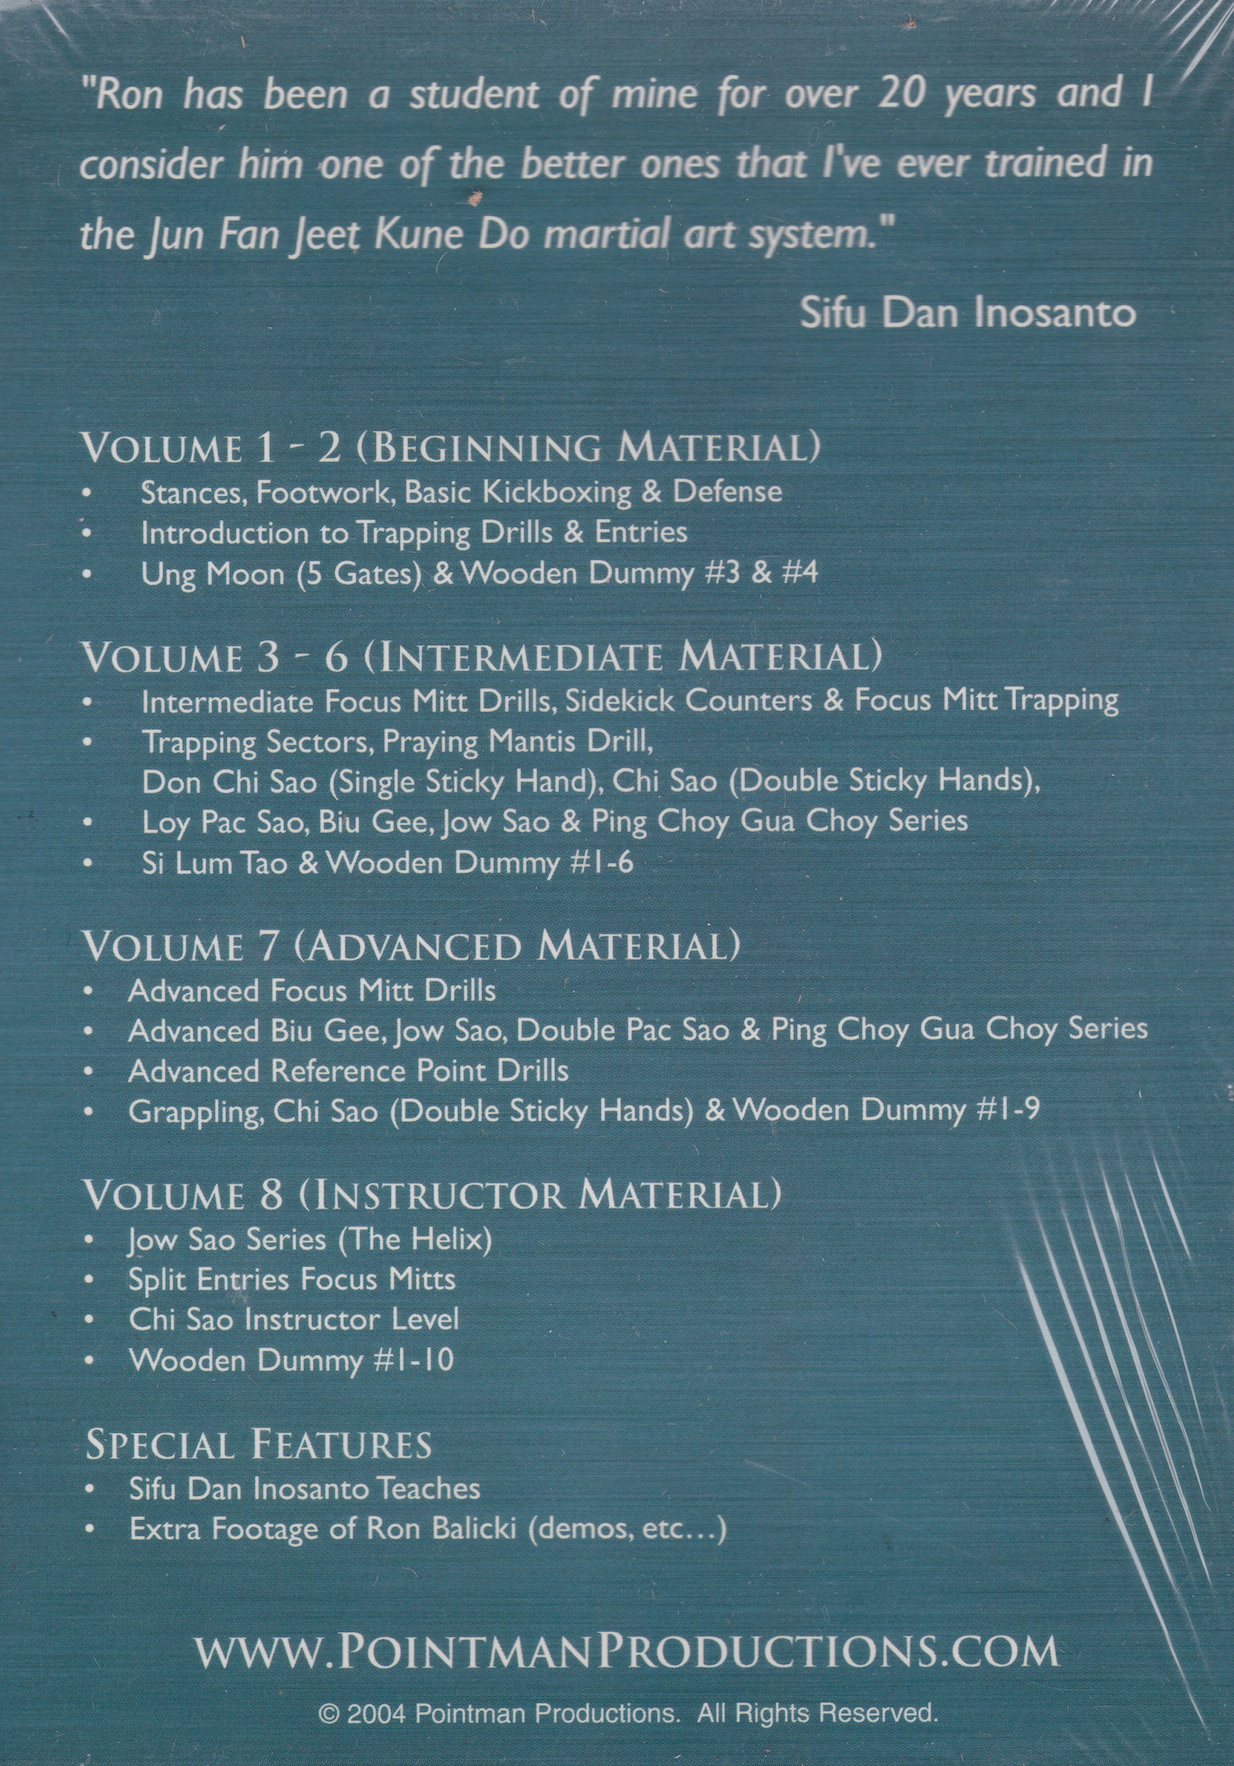 Ron Balicki's Jun Fan Jeet Kune Do Instructor Series 8 DVD Set (Preowned)